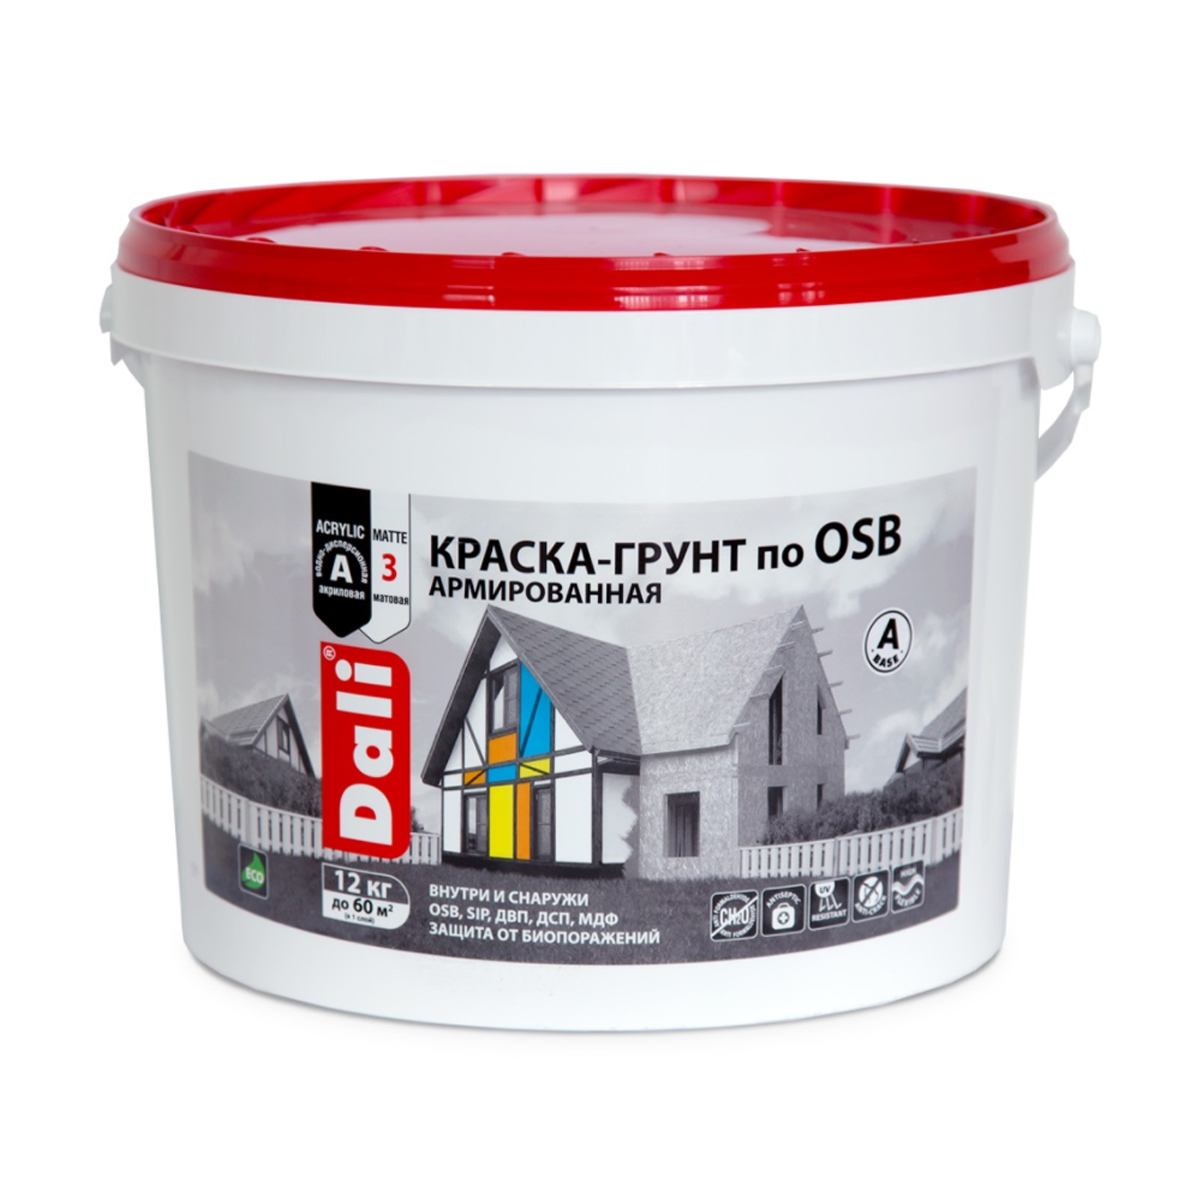 Краска-грунт по OSB Dali, армированная, матовая, база A, белая, 12 кг грунт для плит osb neomid 1 кг